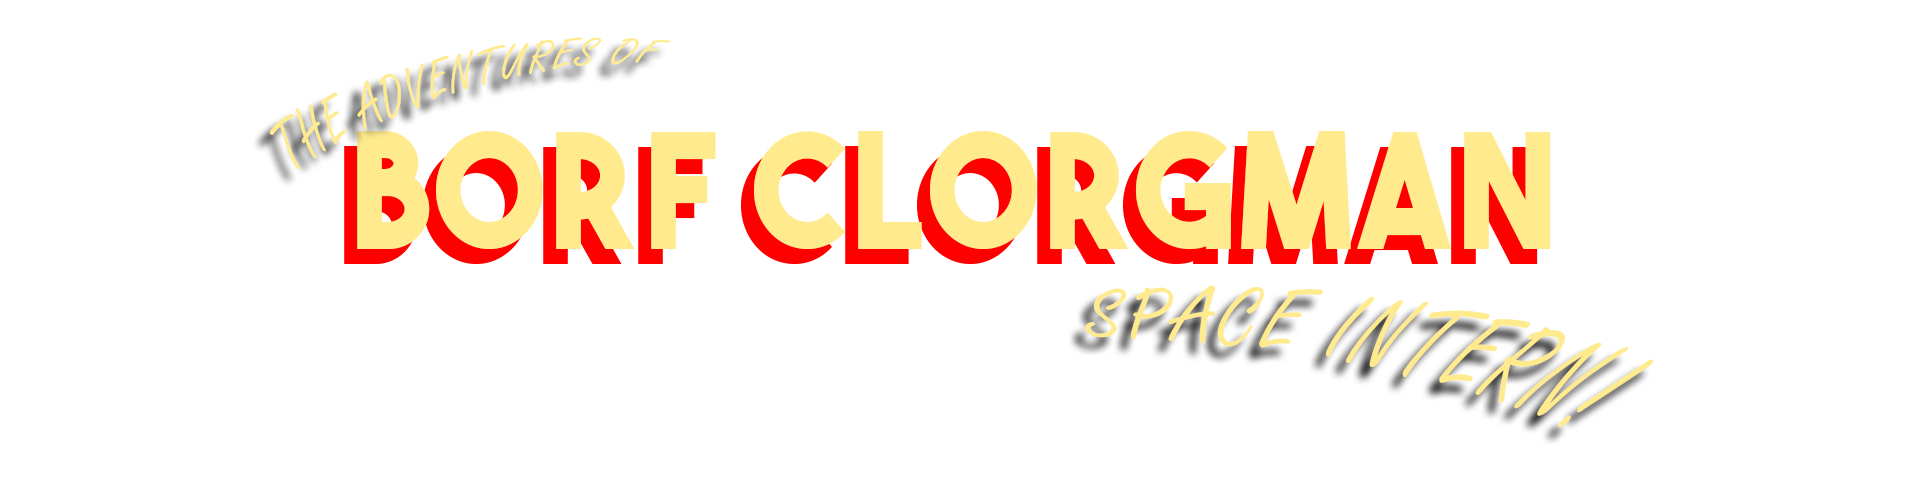 The Adventures of Borf Clorgman: Space Intern